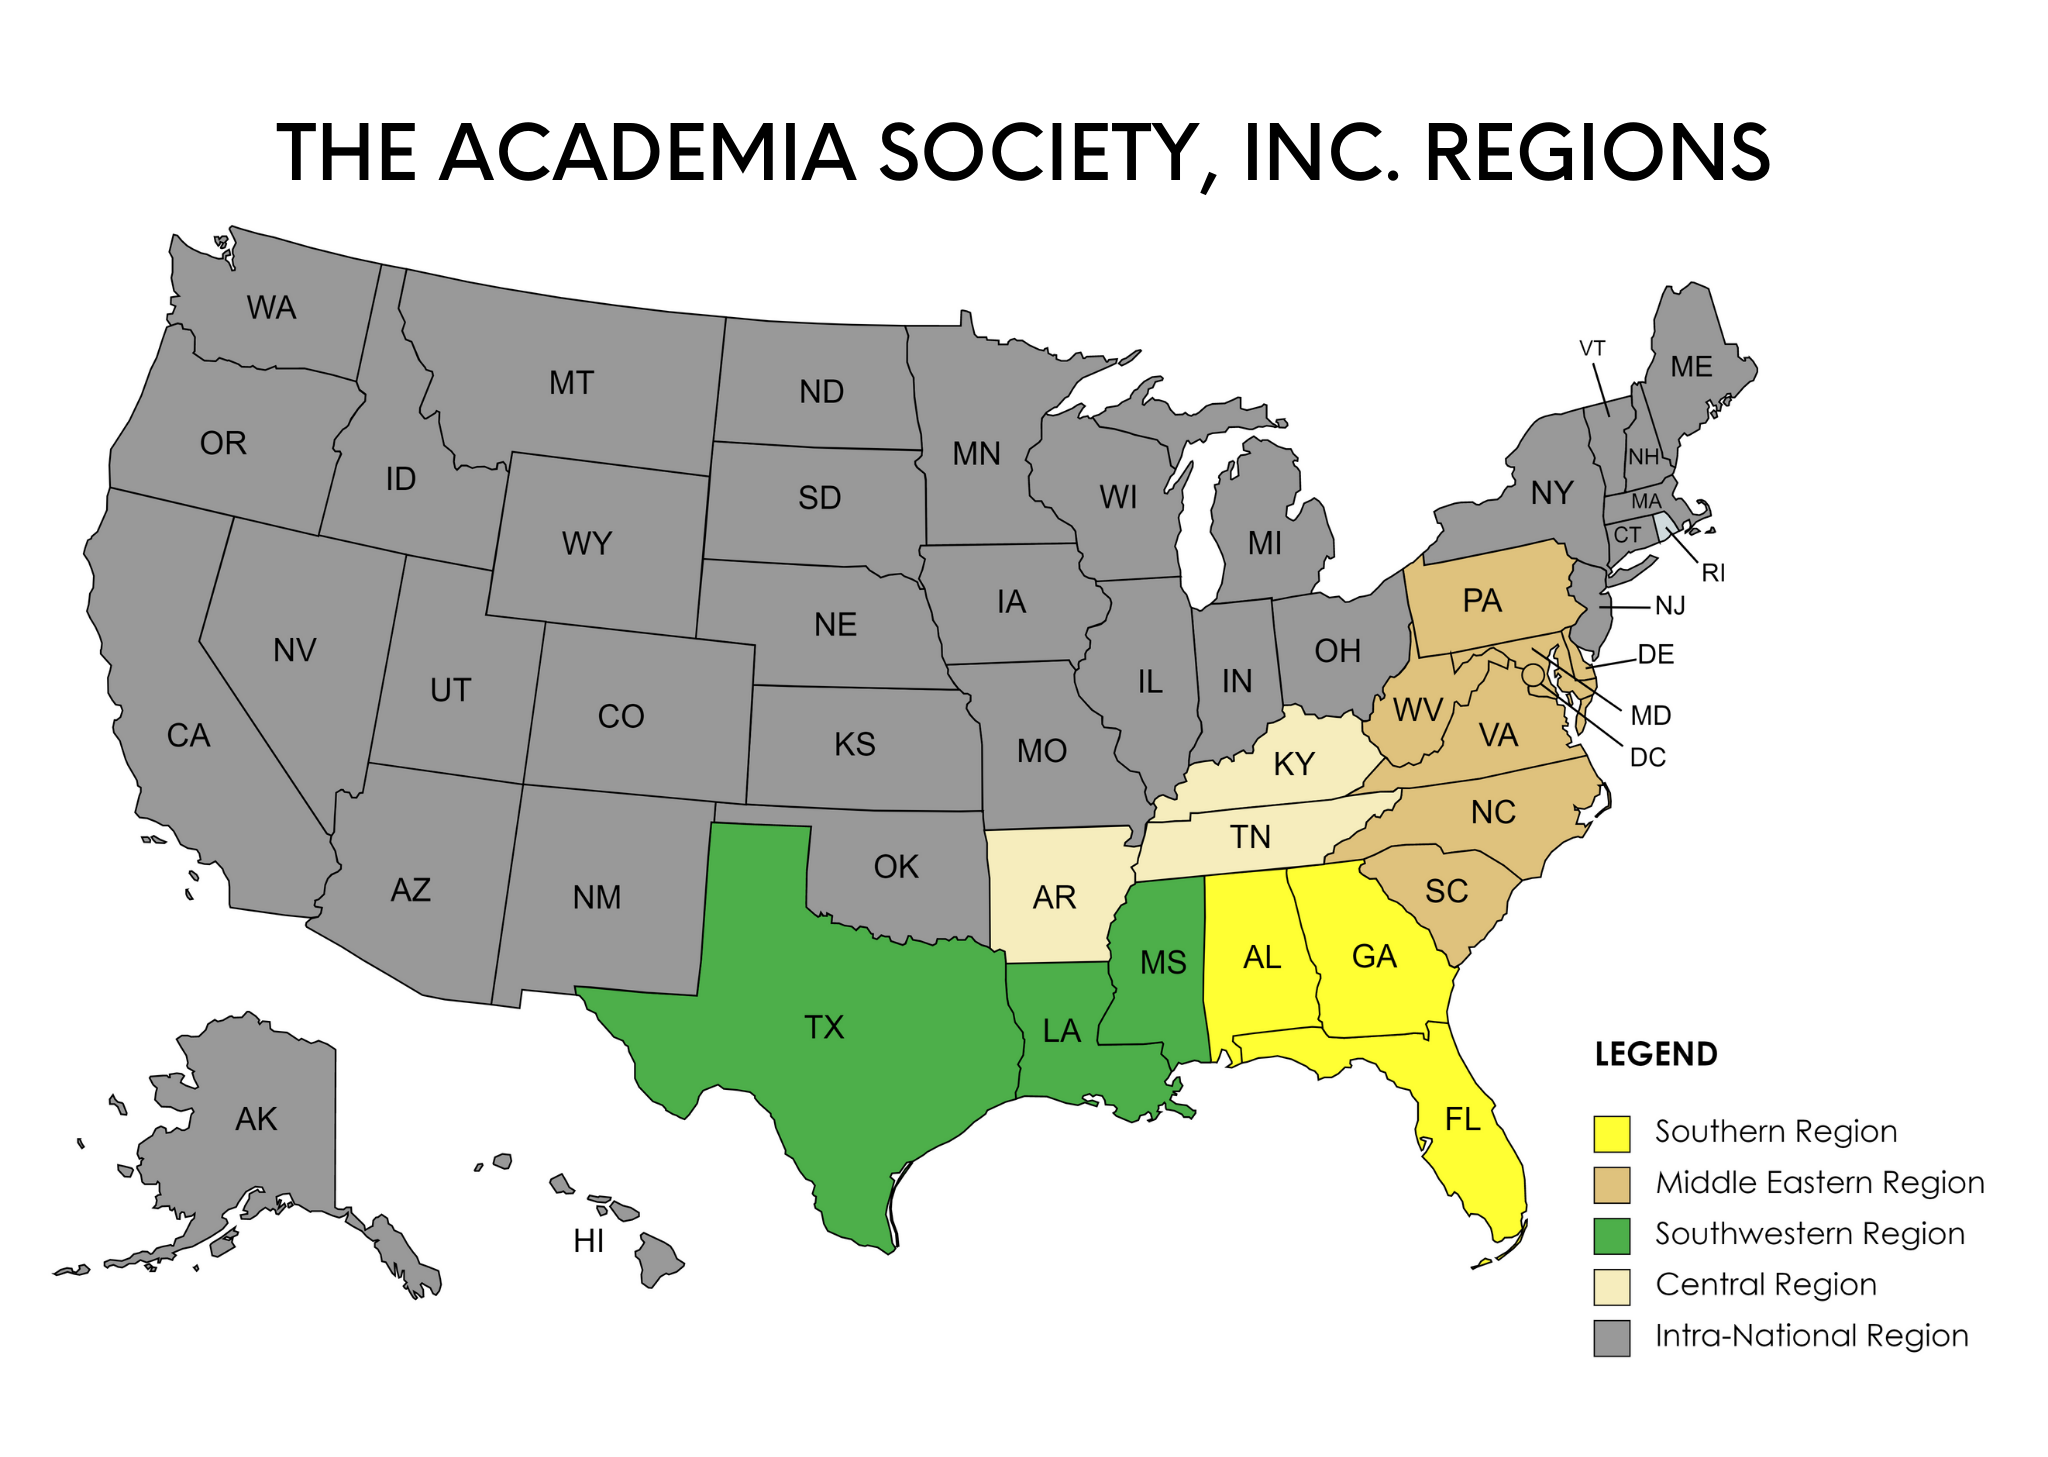 THE ACADEMIA SOCIETY, INC. (1)